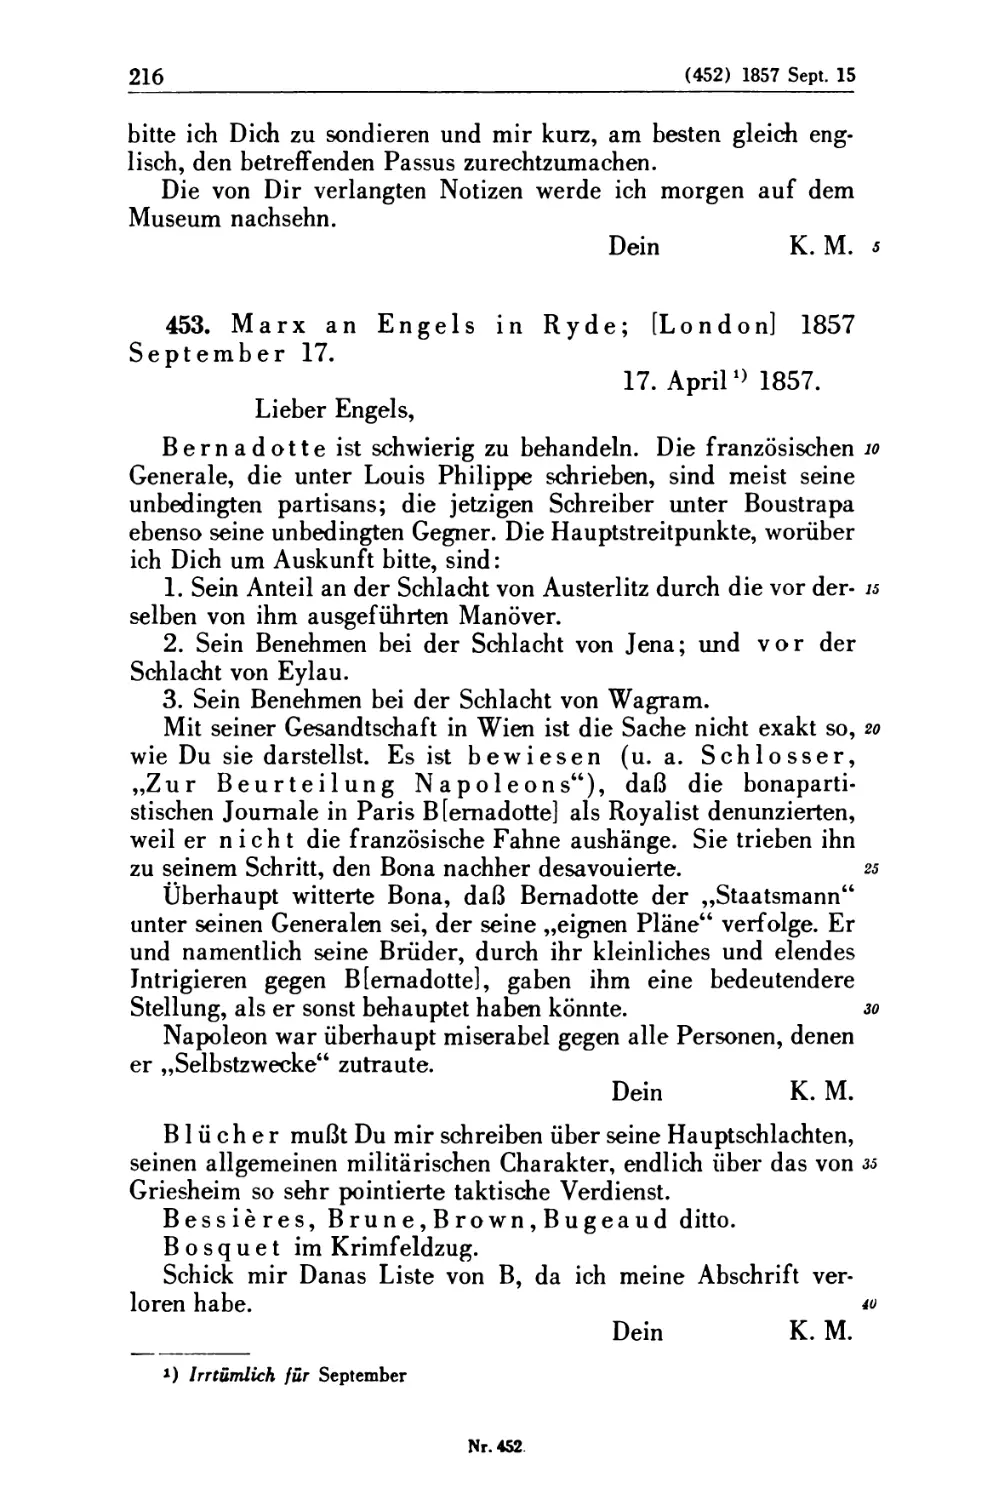 453. Marx an Engels in Ryde; [London] 1857 September 17